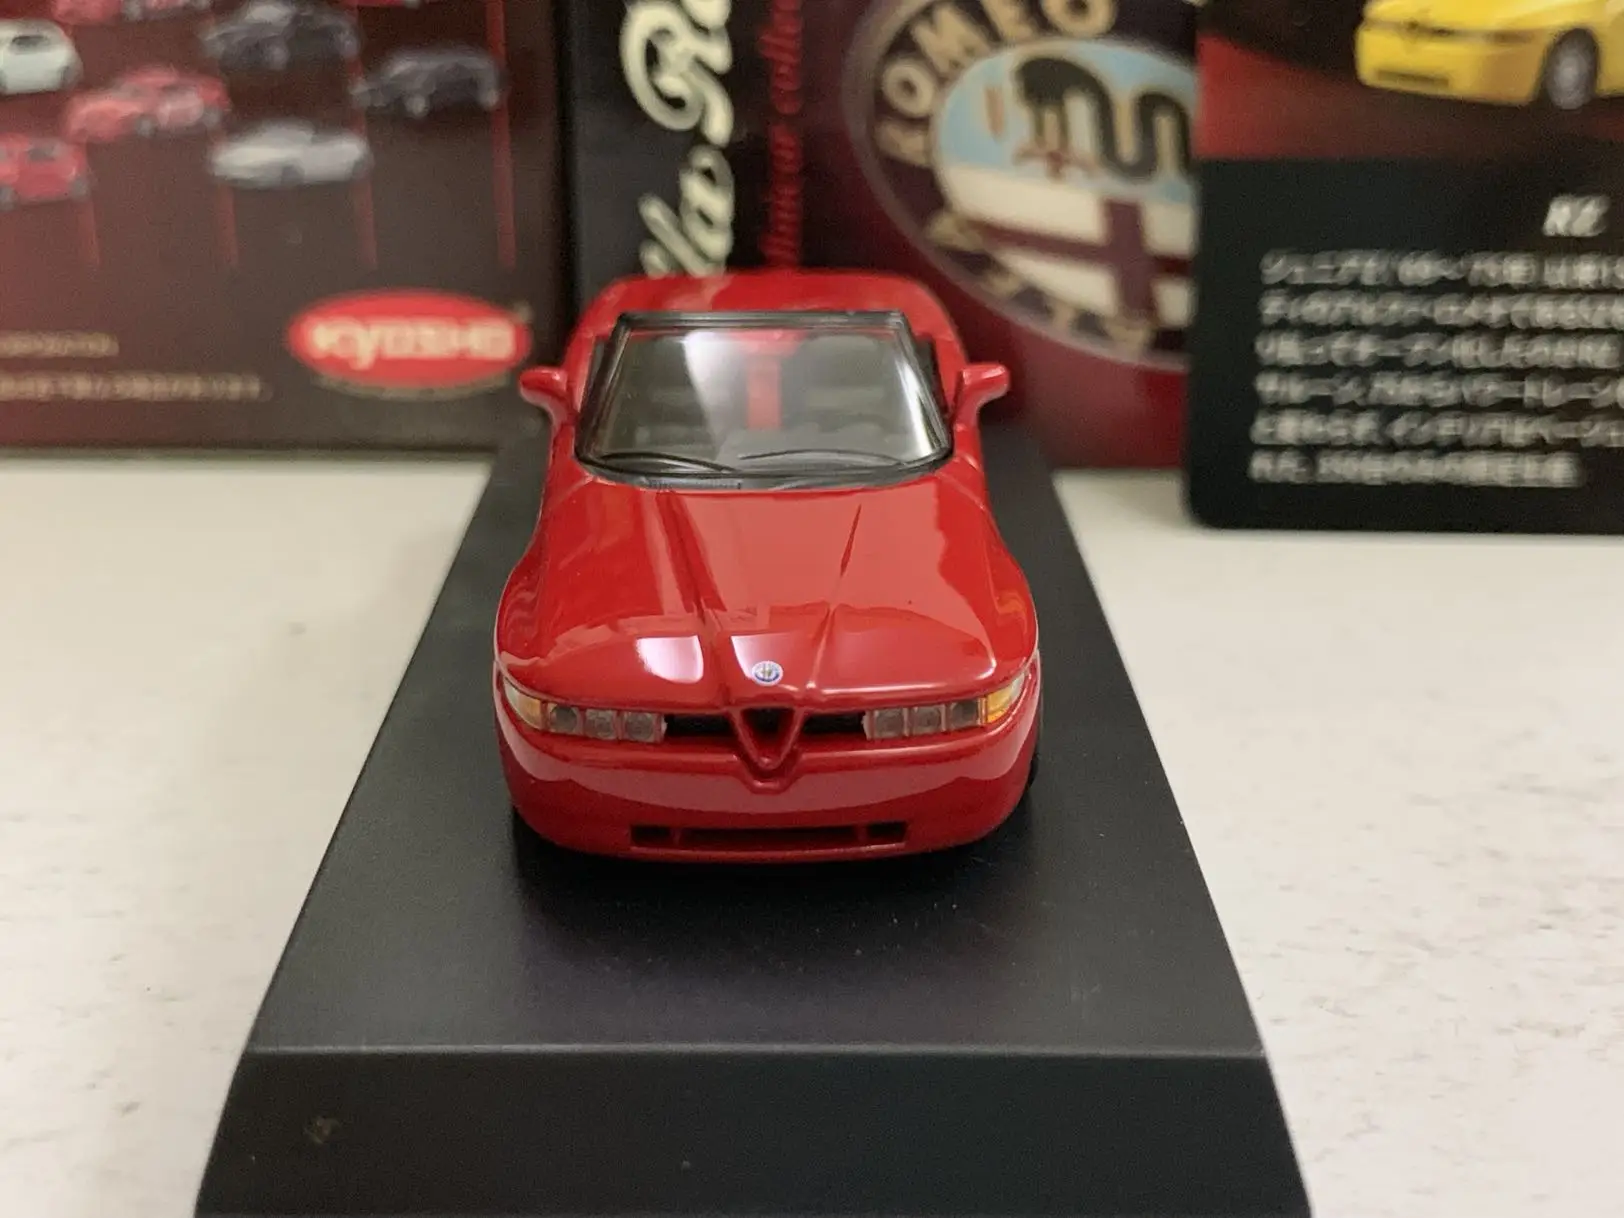 1/64 Kyosho Alfa Romeo RZ RED diecast car model 